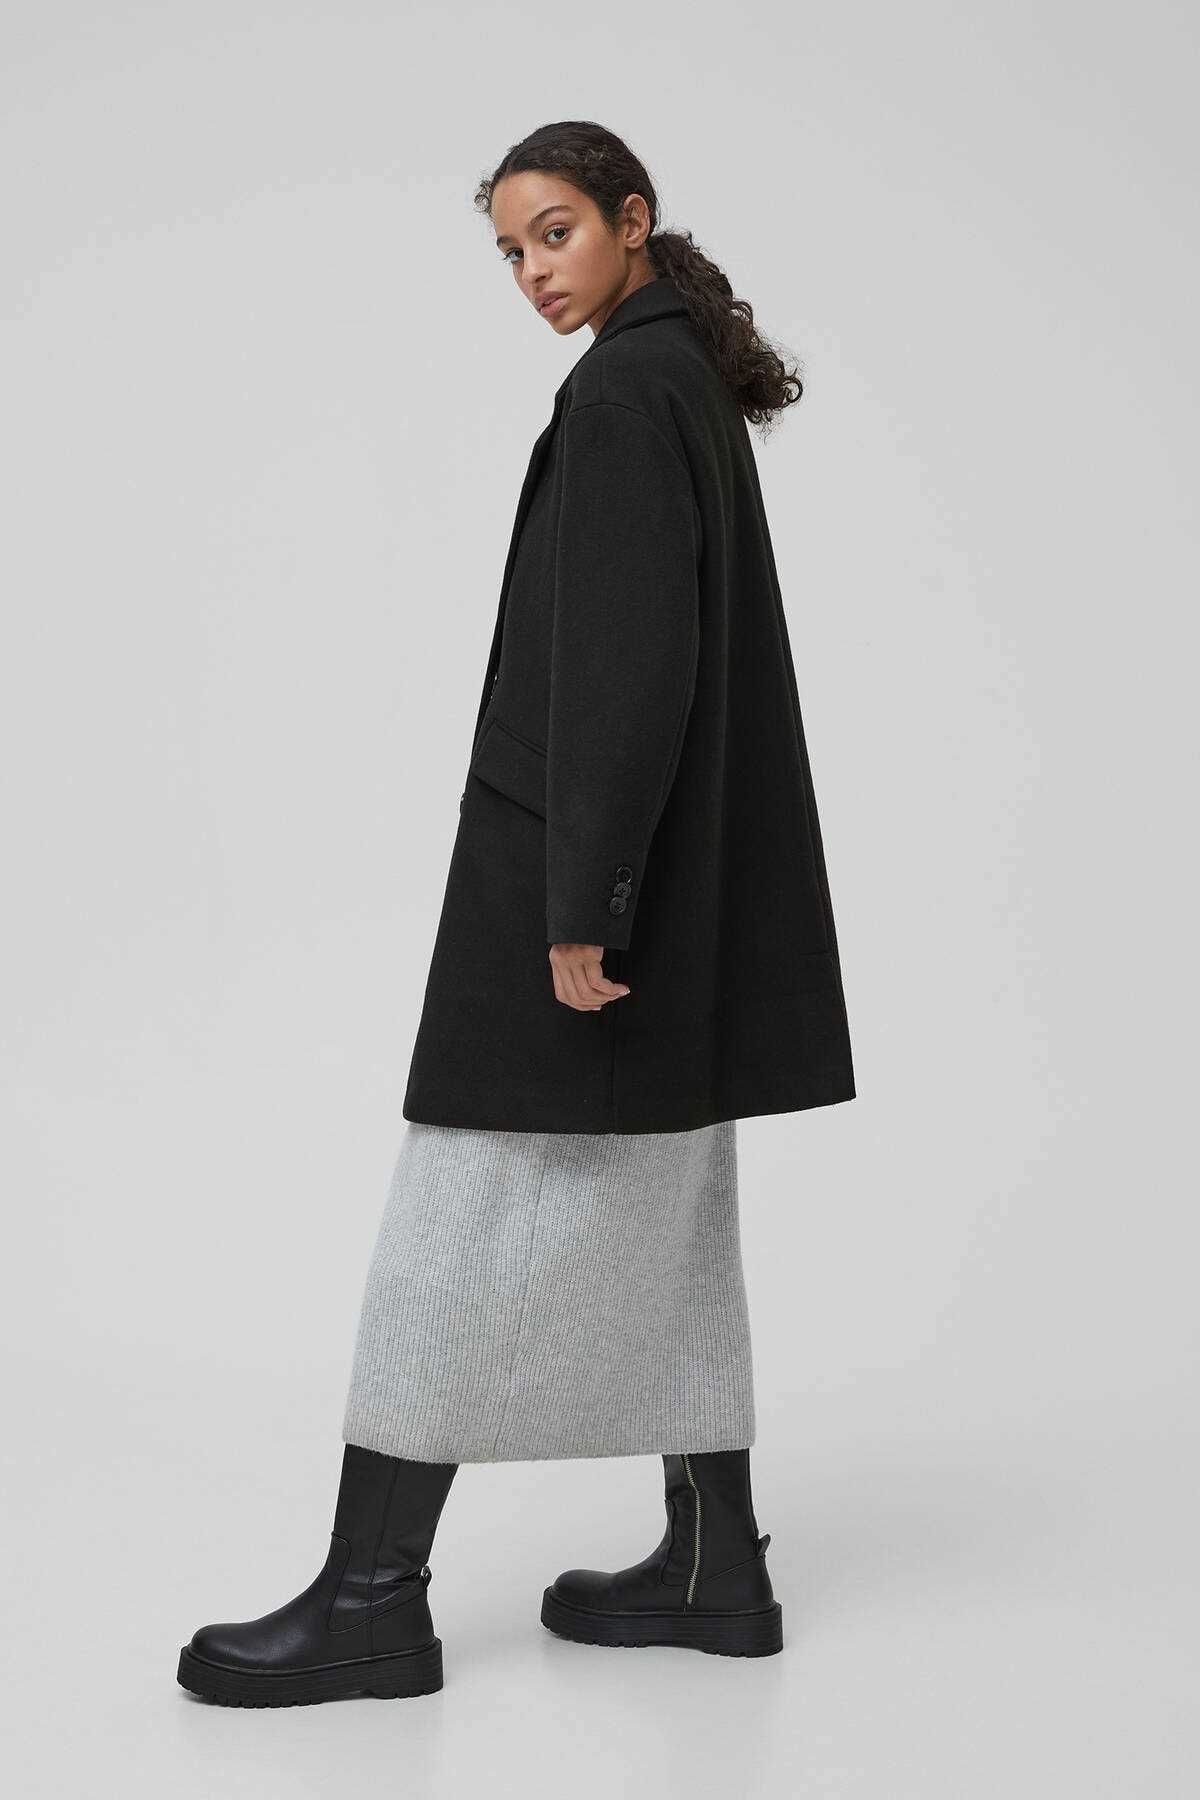 پالتو زمستانی زنانه برند Pull & Bear رنگ مشکی کد ty67129356